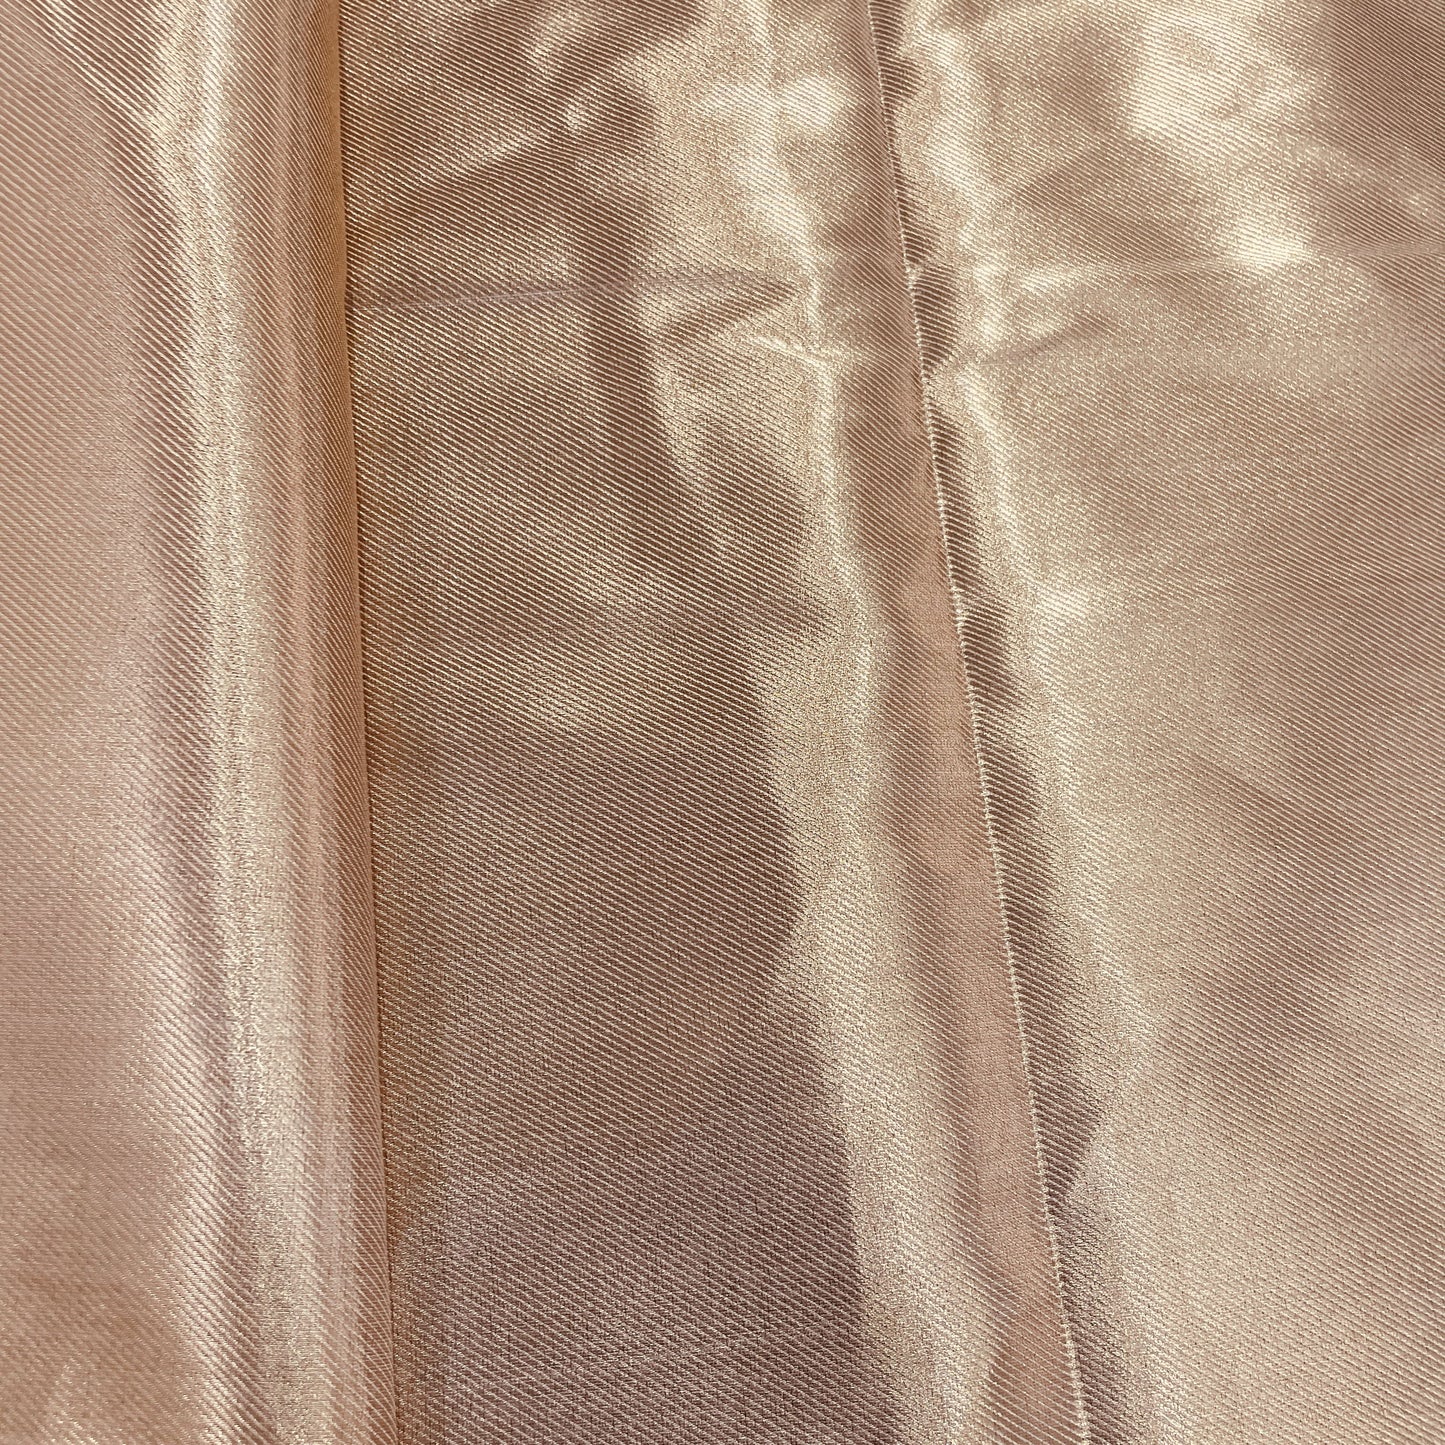 Rust Brown Solid Banarsi Brocade Fabric